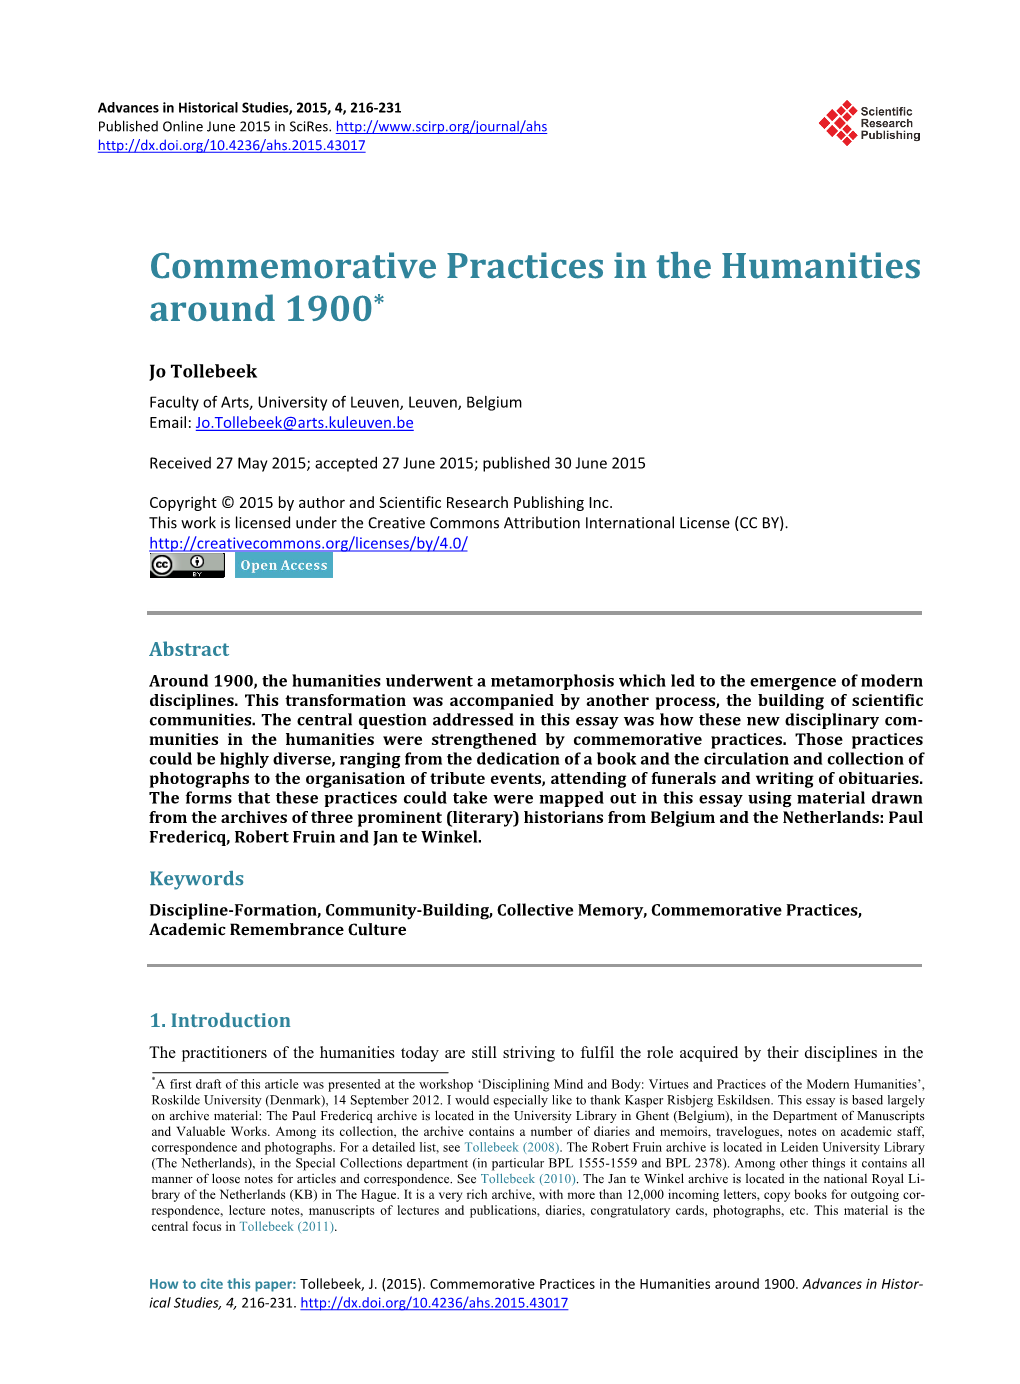 Commemorative Practices in the Humanities Around 1900*